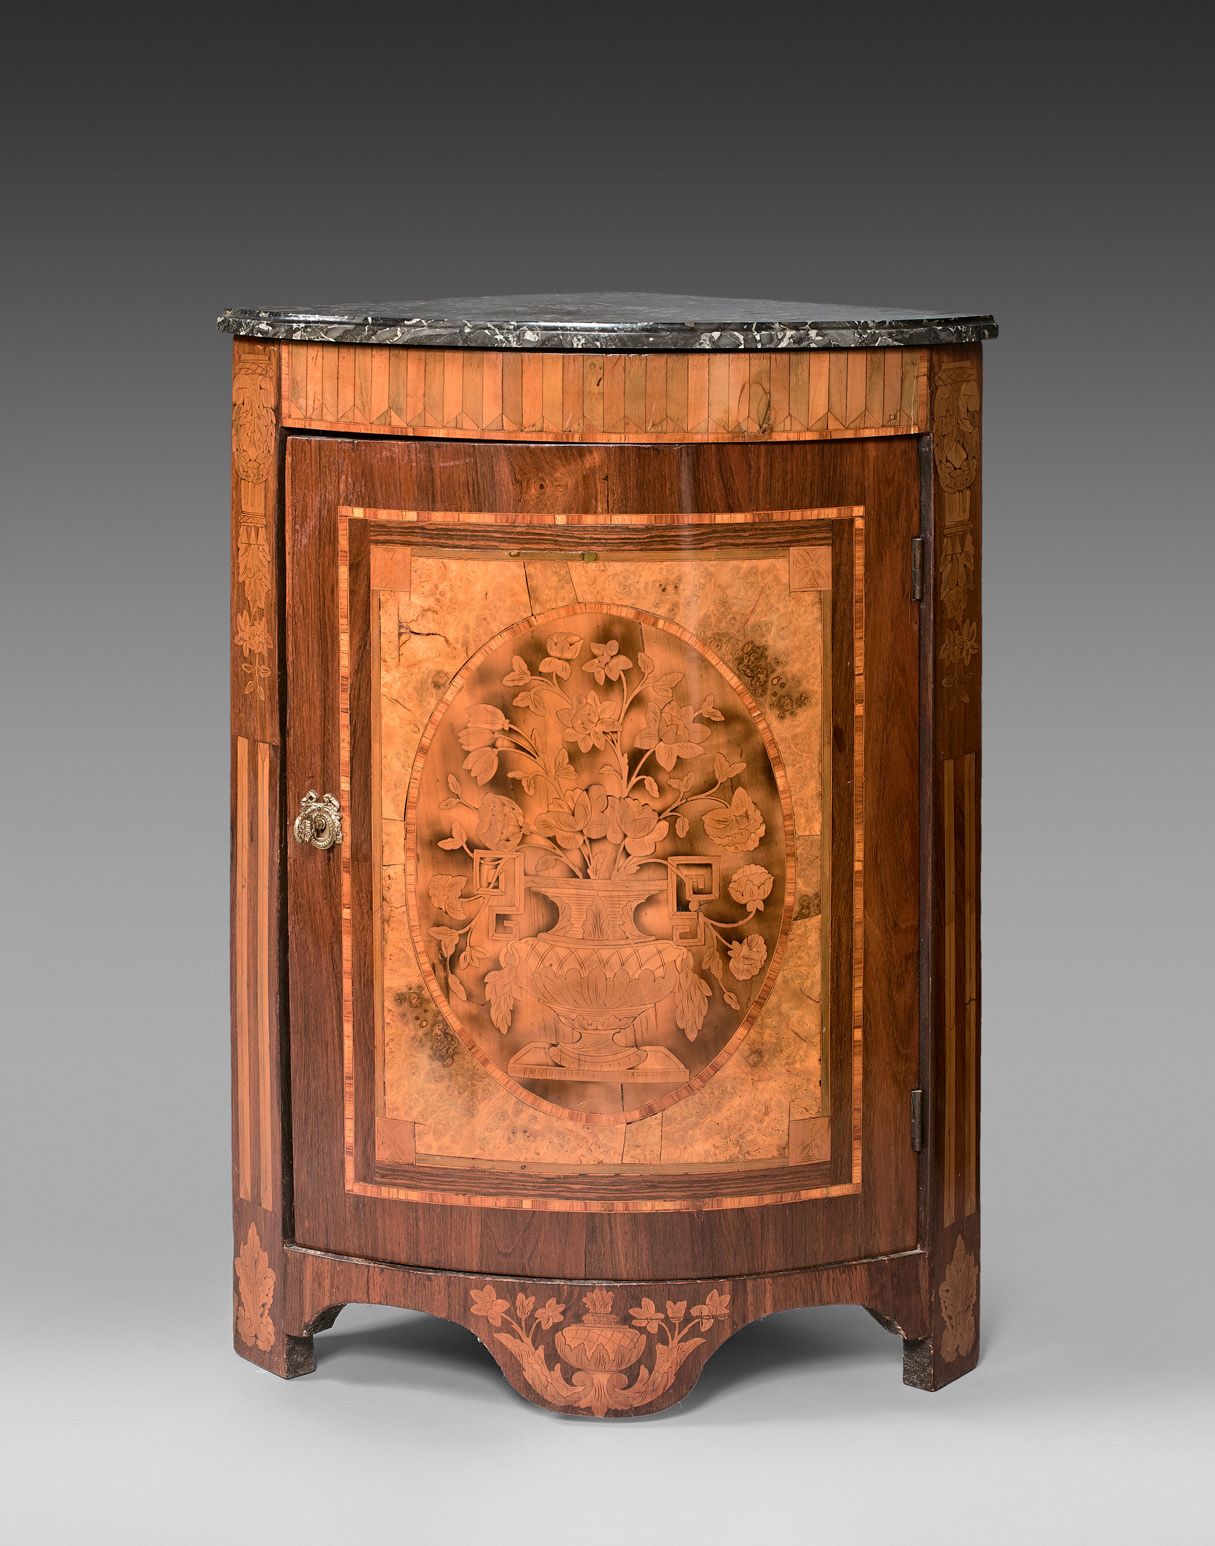 Null 一个单门的弧形单板餐具柜，上面镶嵌着一个开花的瓮的装饰，在一个奖章中。立柱上装饰有花朵和模拟的凹槽。黑色脉络的大理石面板。

19世纪初的荷兰作品。
&hellip;